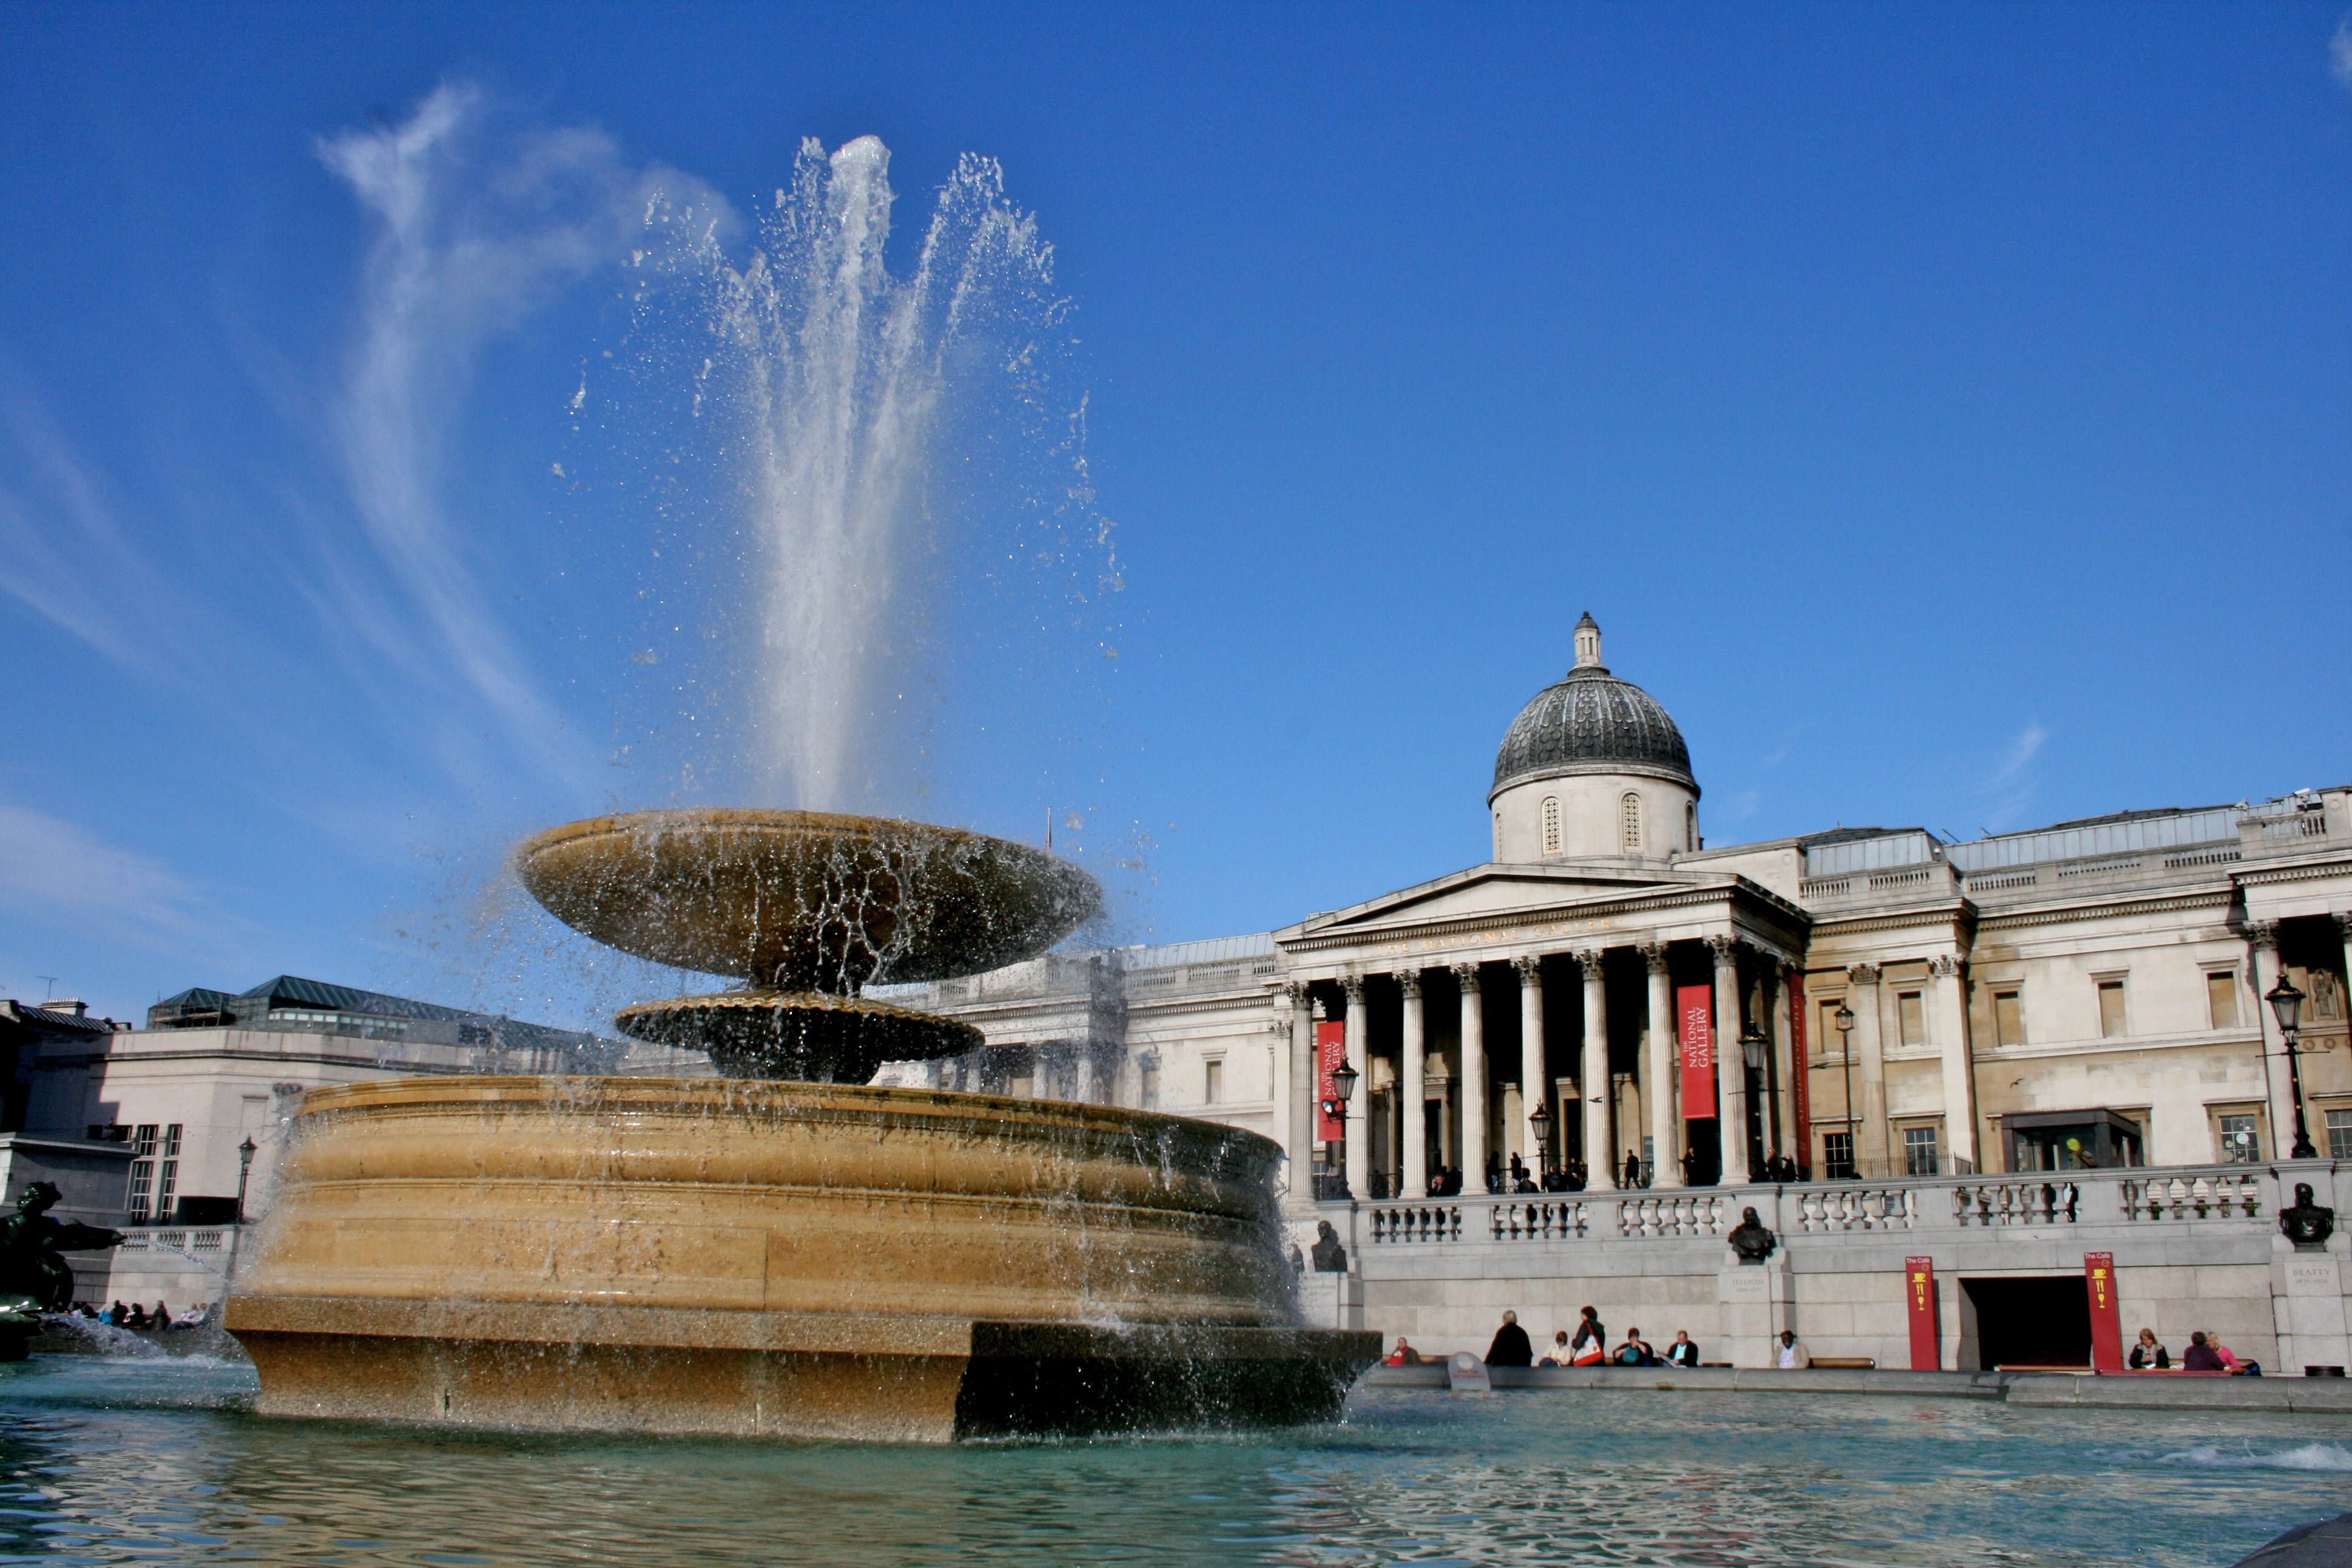 File:Fountain in Trafalgar Square 1.jpg - Wikimedia Commons